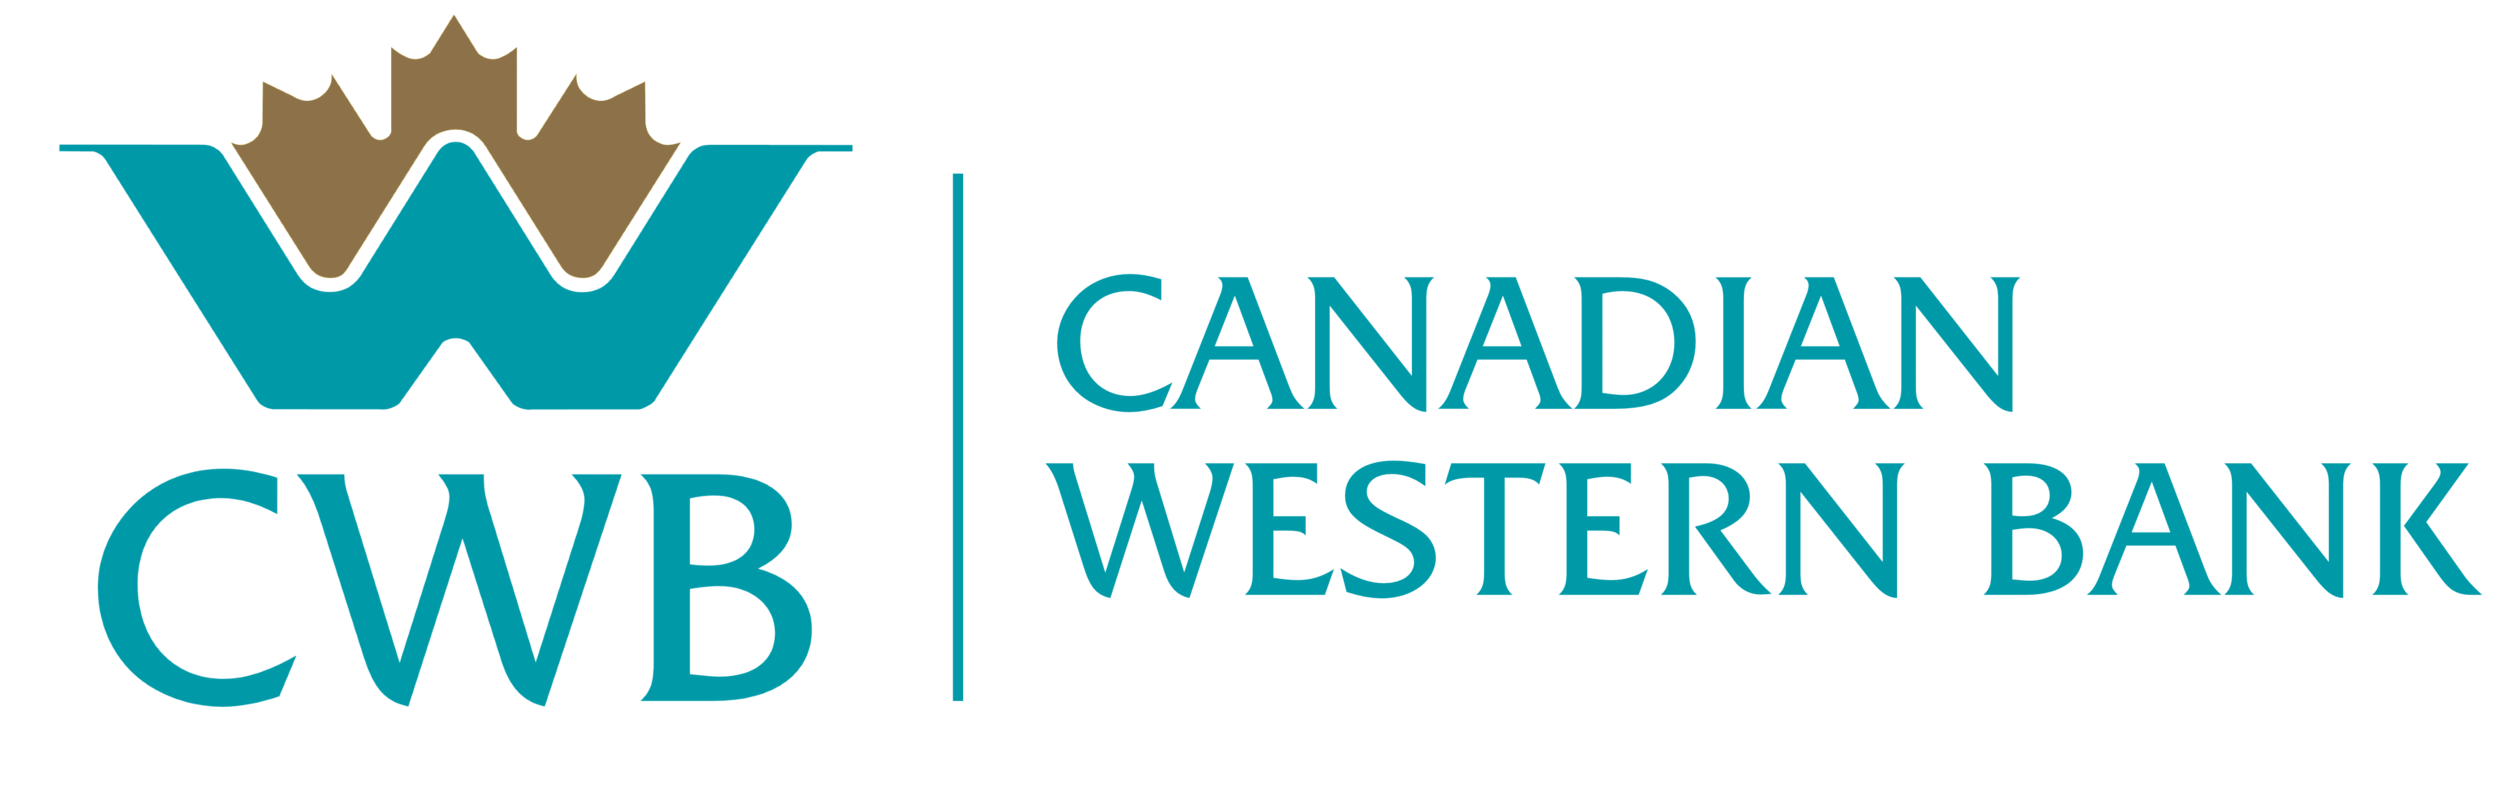 CWB_Canadian_Western_Bank_logo.png